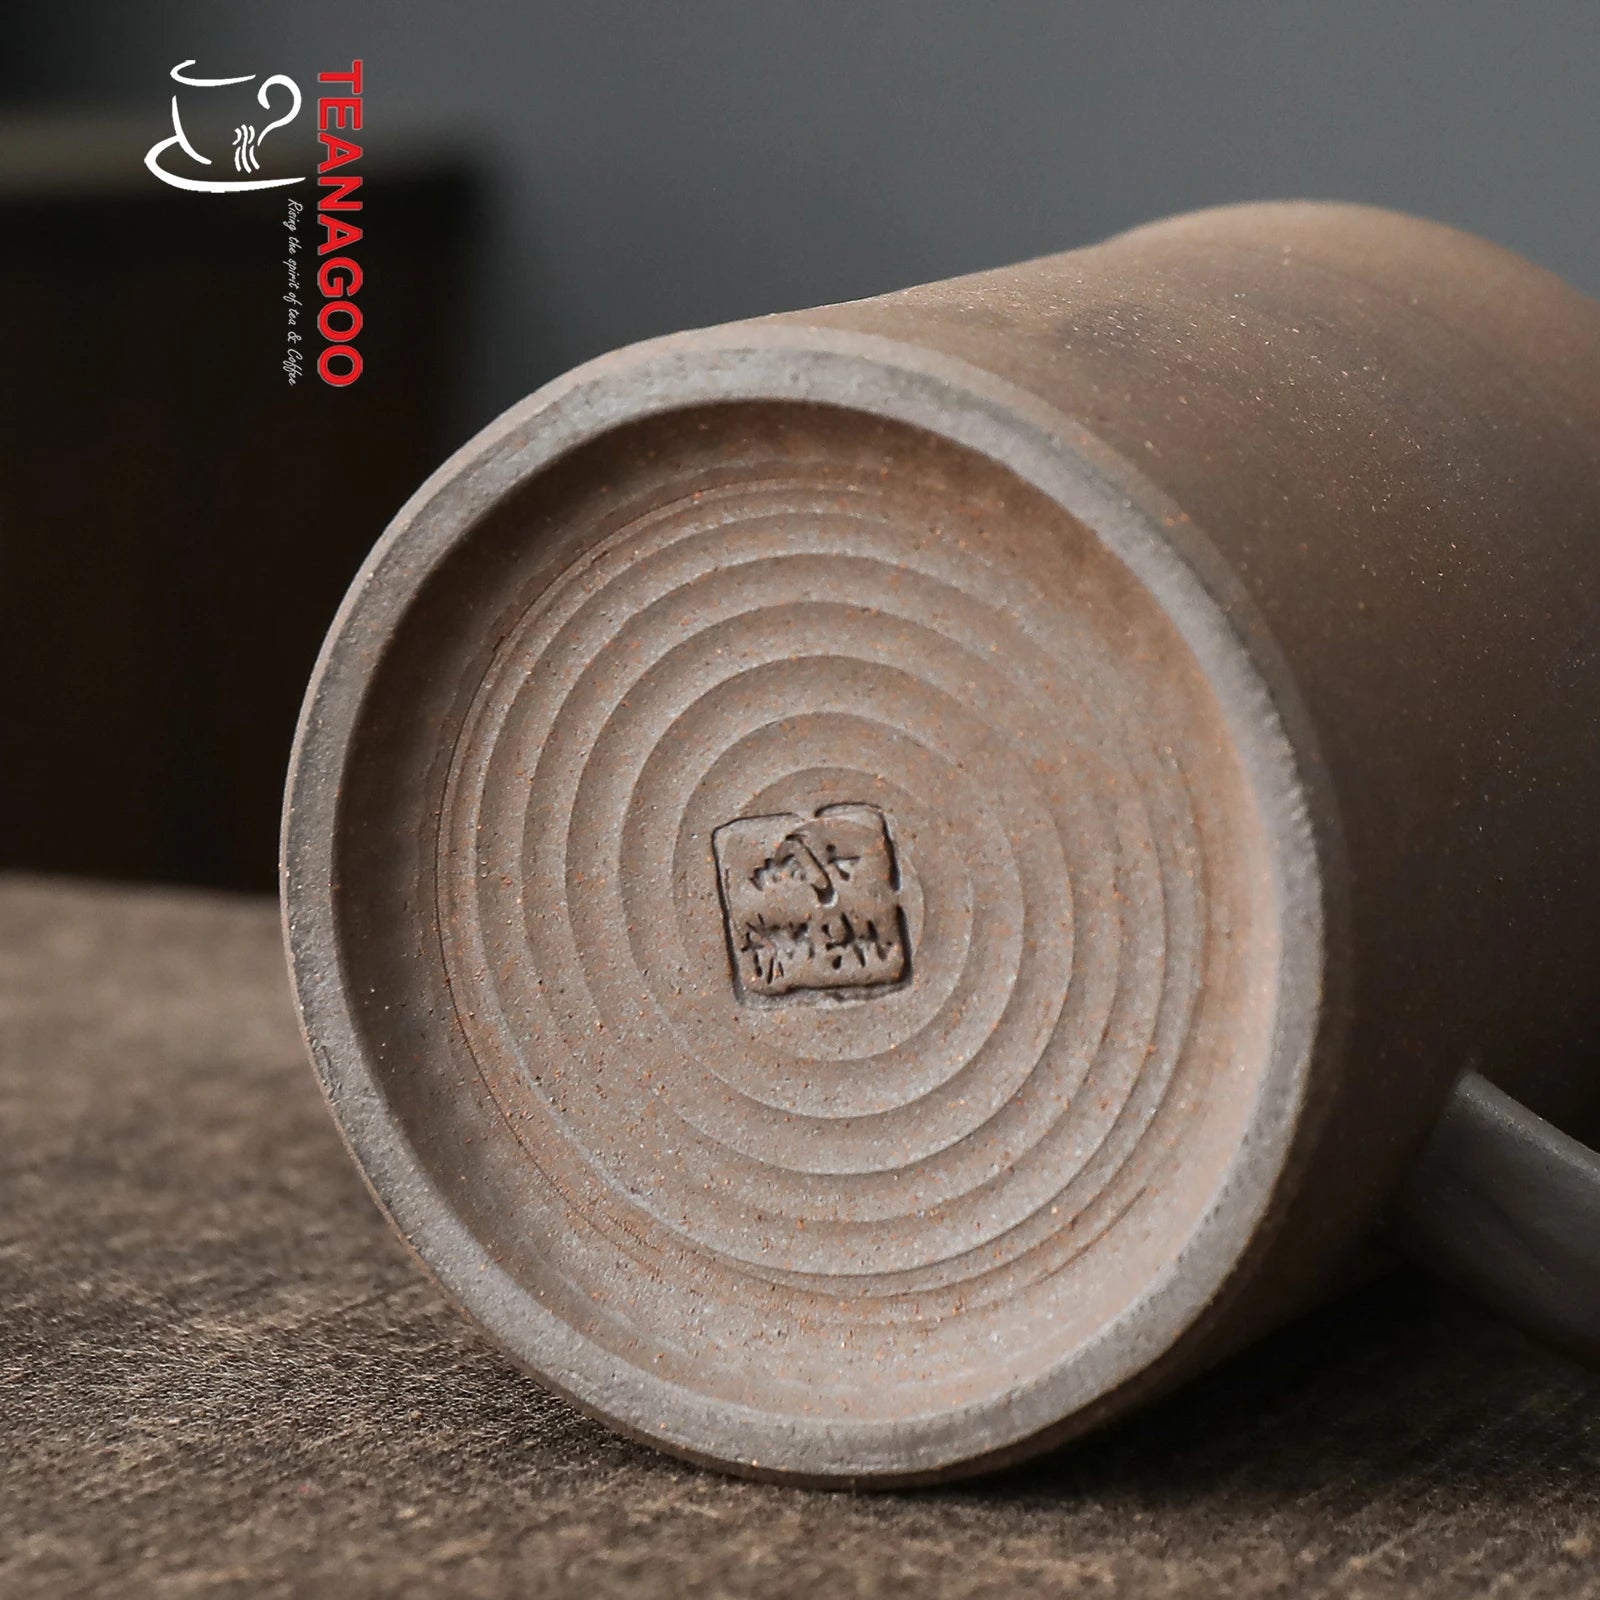 Handcrafted Ceramic Tea Cup Pottery Clay Coffee Mug 125ml